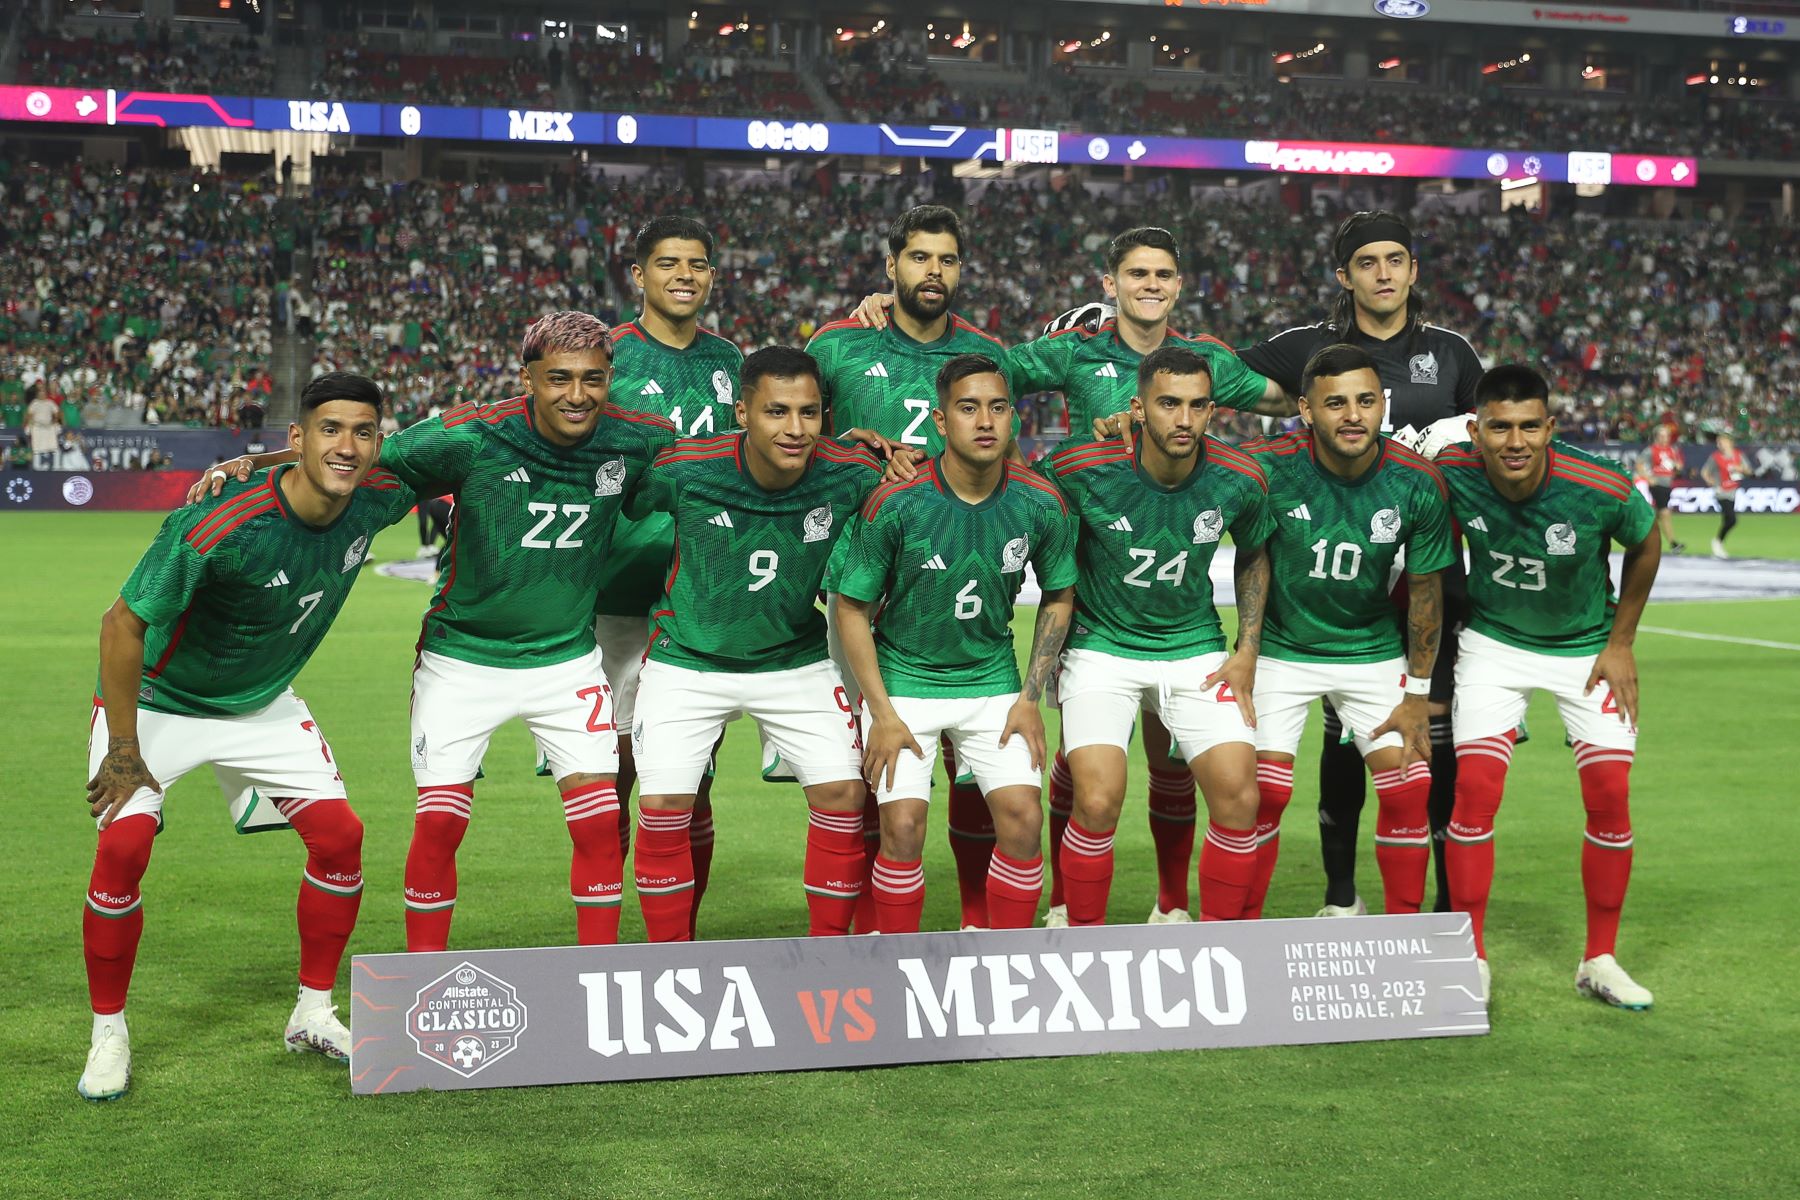 Carlos Acevedo named to the roster for Liga MX All-Star match vs